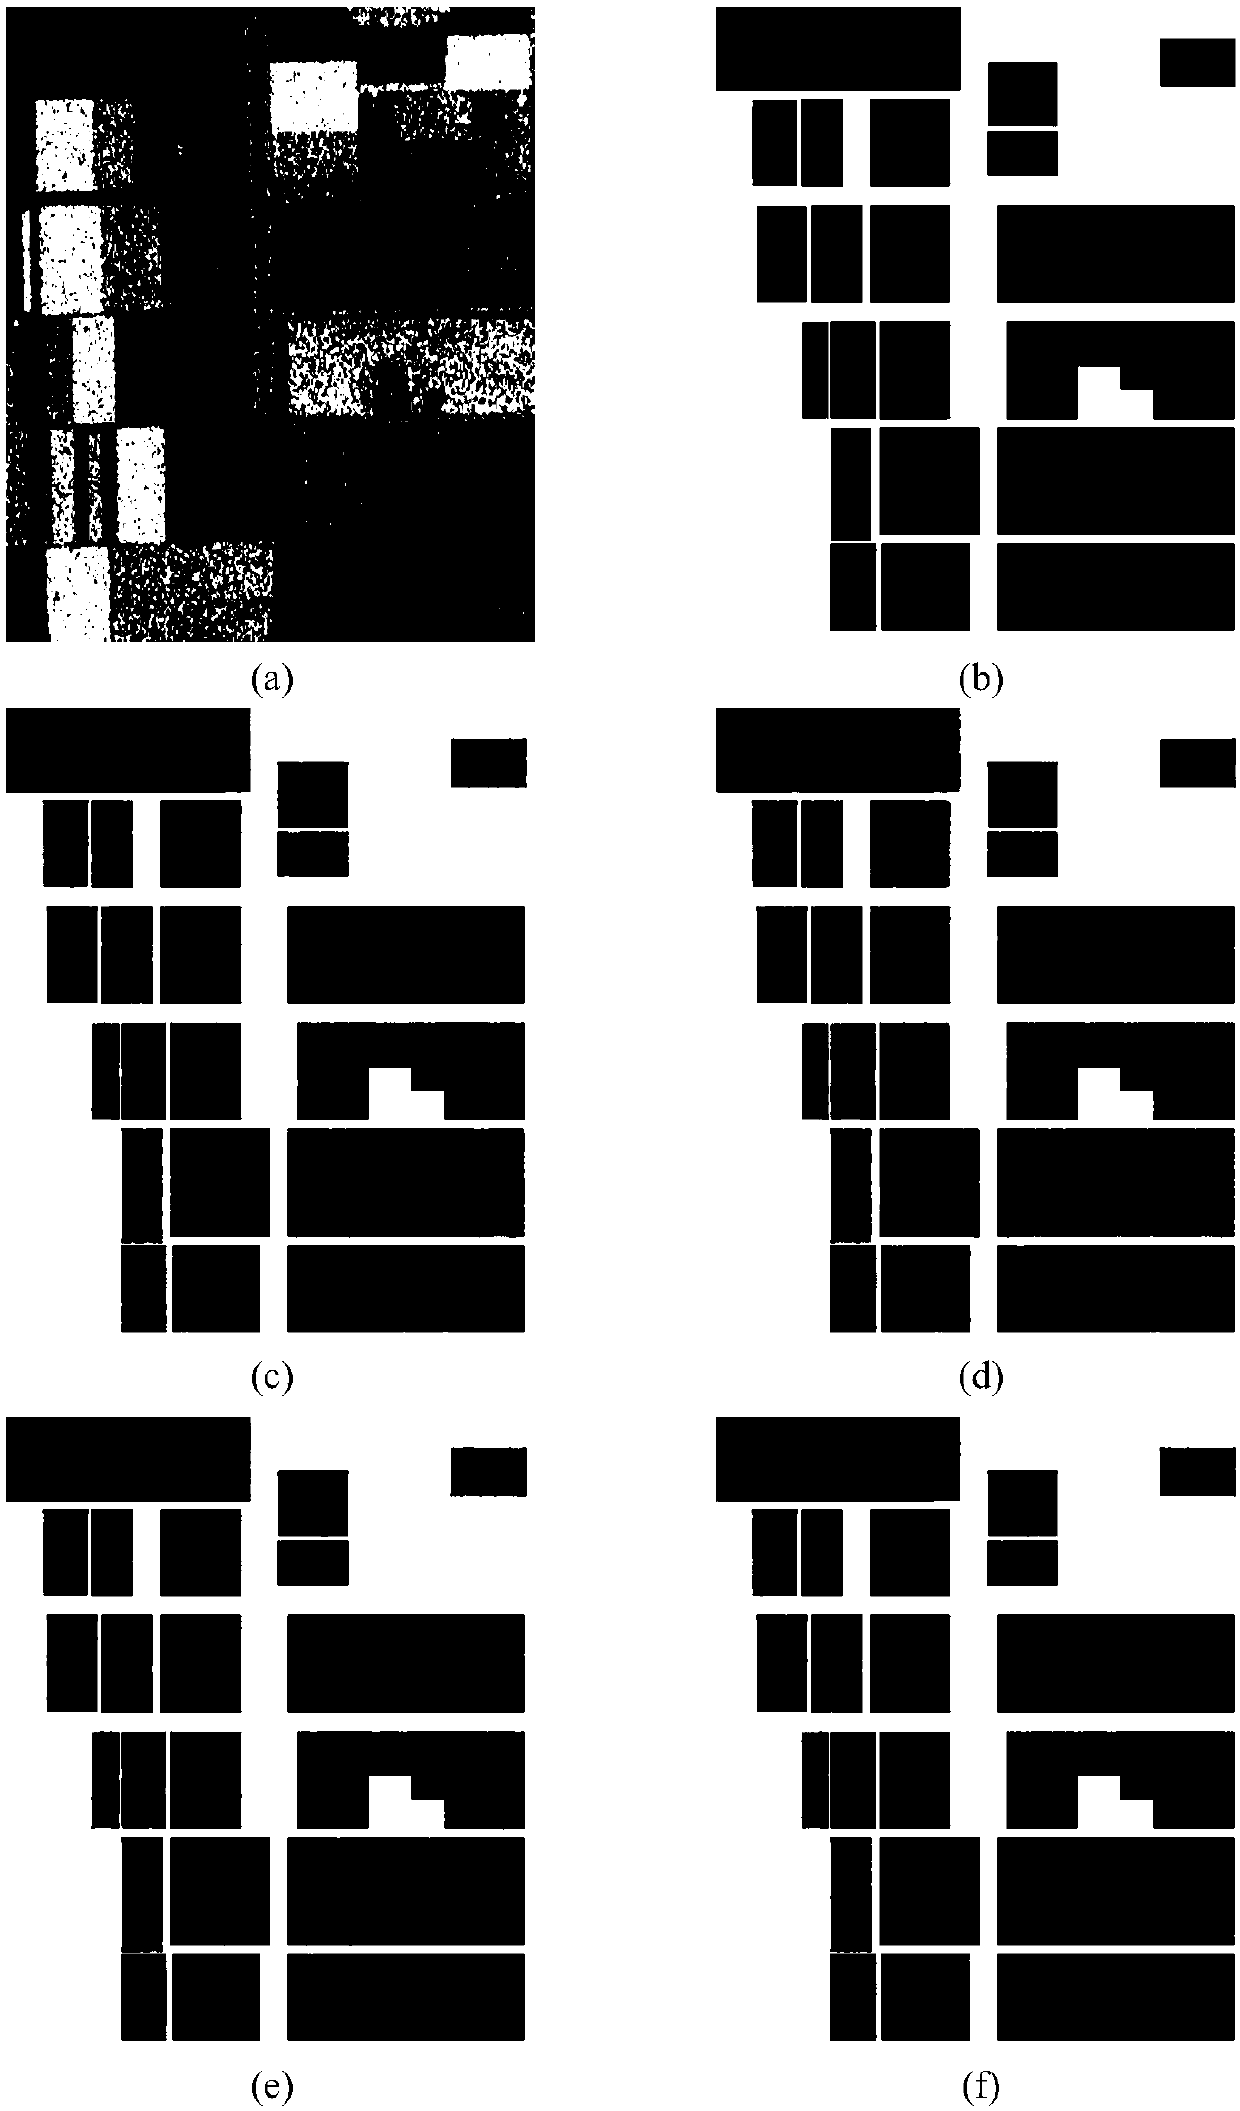 Polarized SAR image classification method based on semi-supervised depth distance metric network